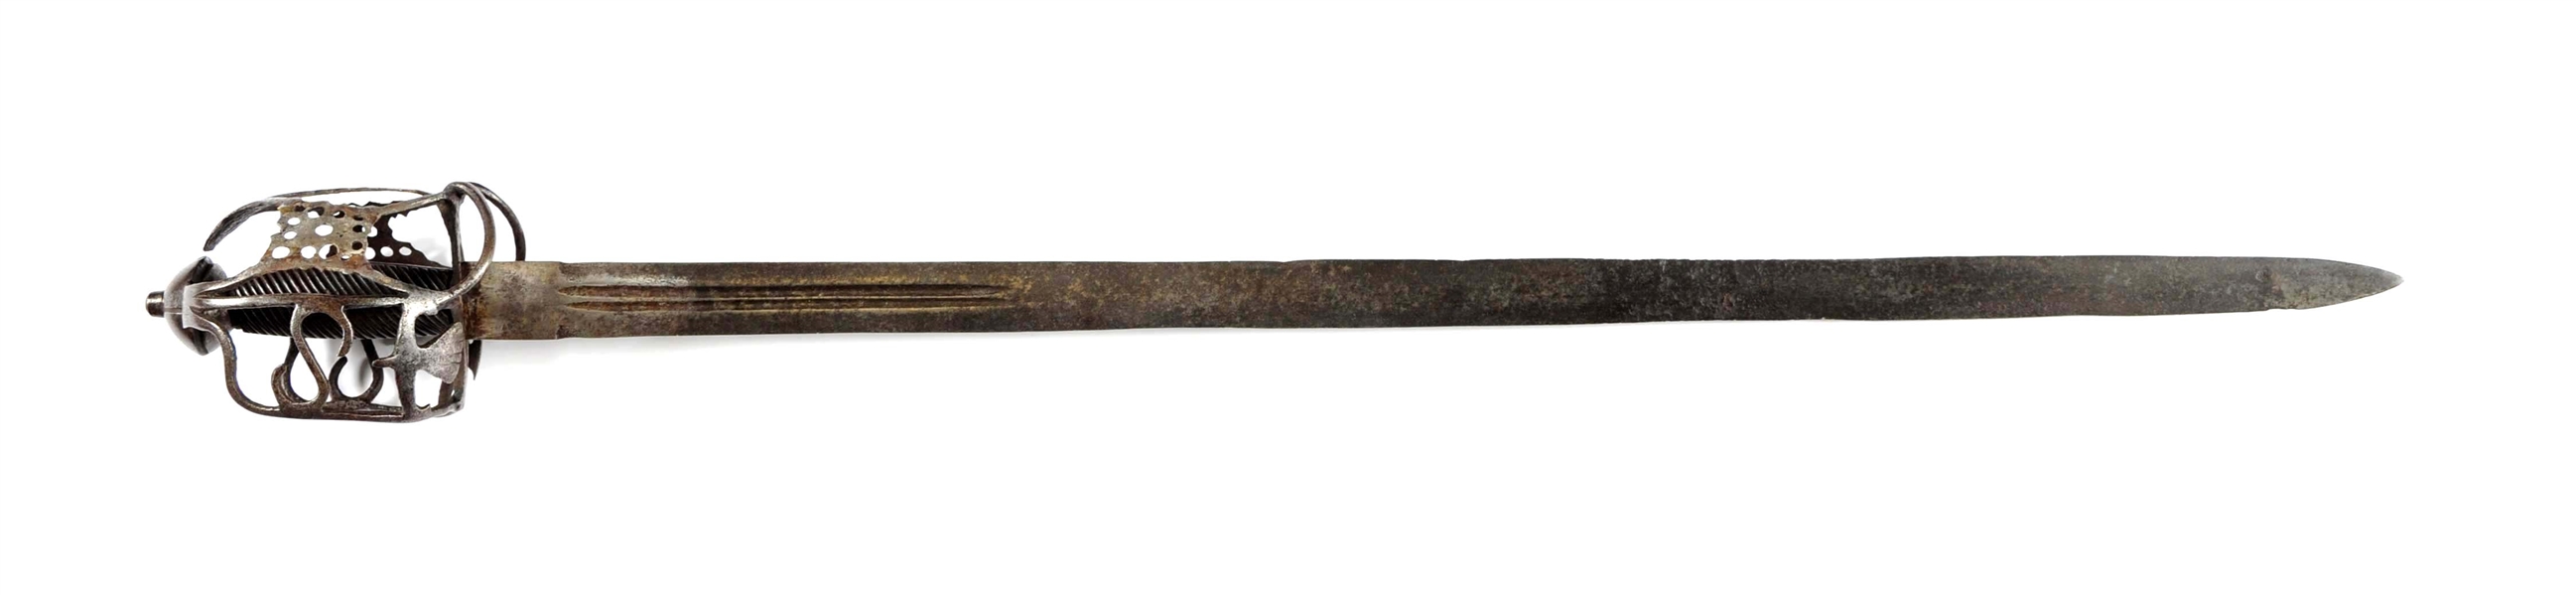 17TH CENTURY SCOTTISH BASKET HILT SWORD.